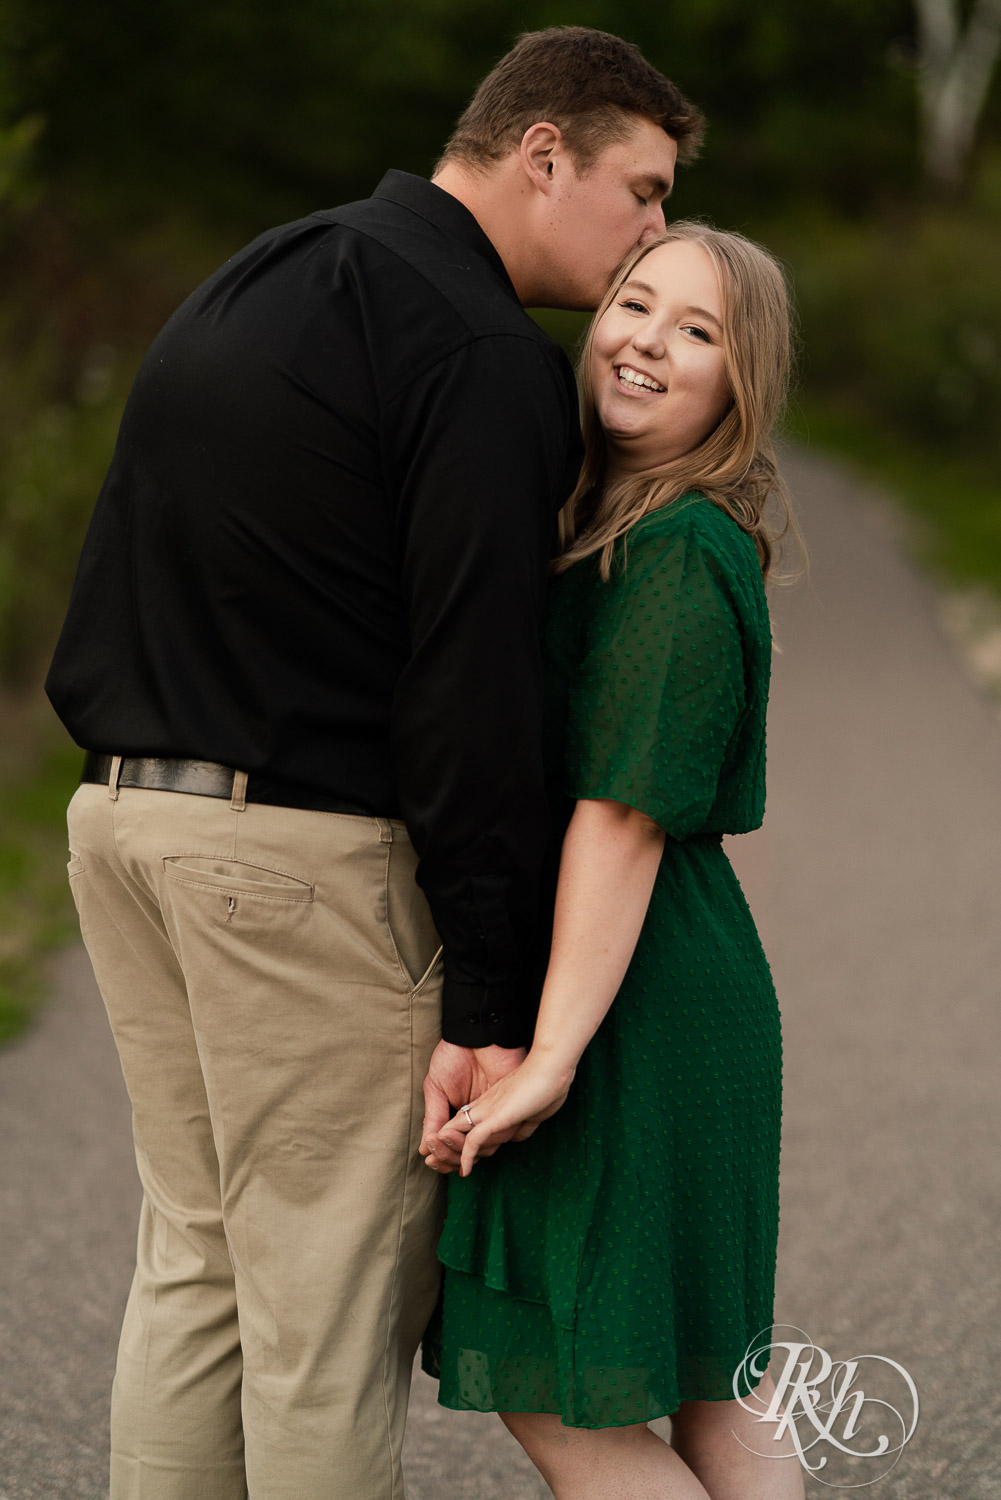 Man in black dress shirt kissing woman in green dress on foot path in Eagan, Minnesota.